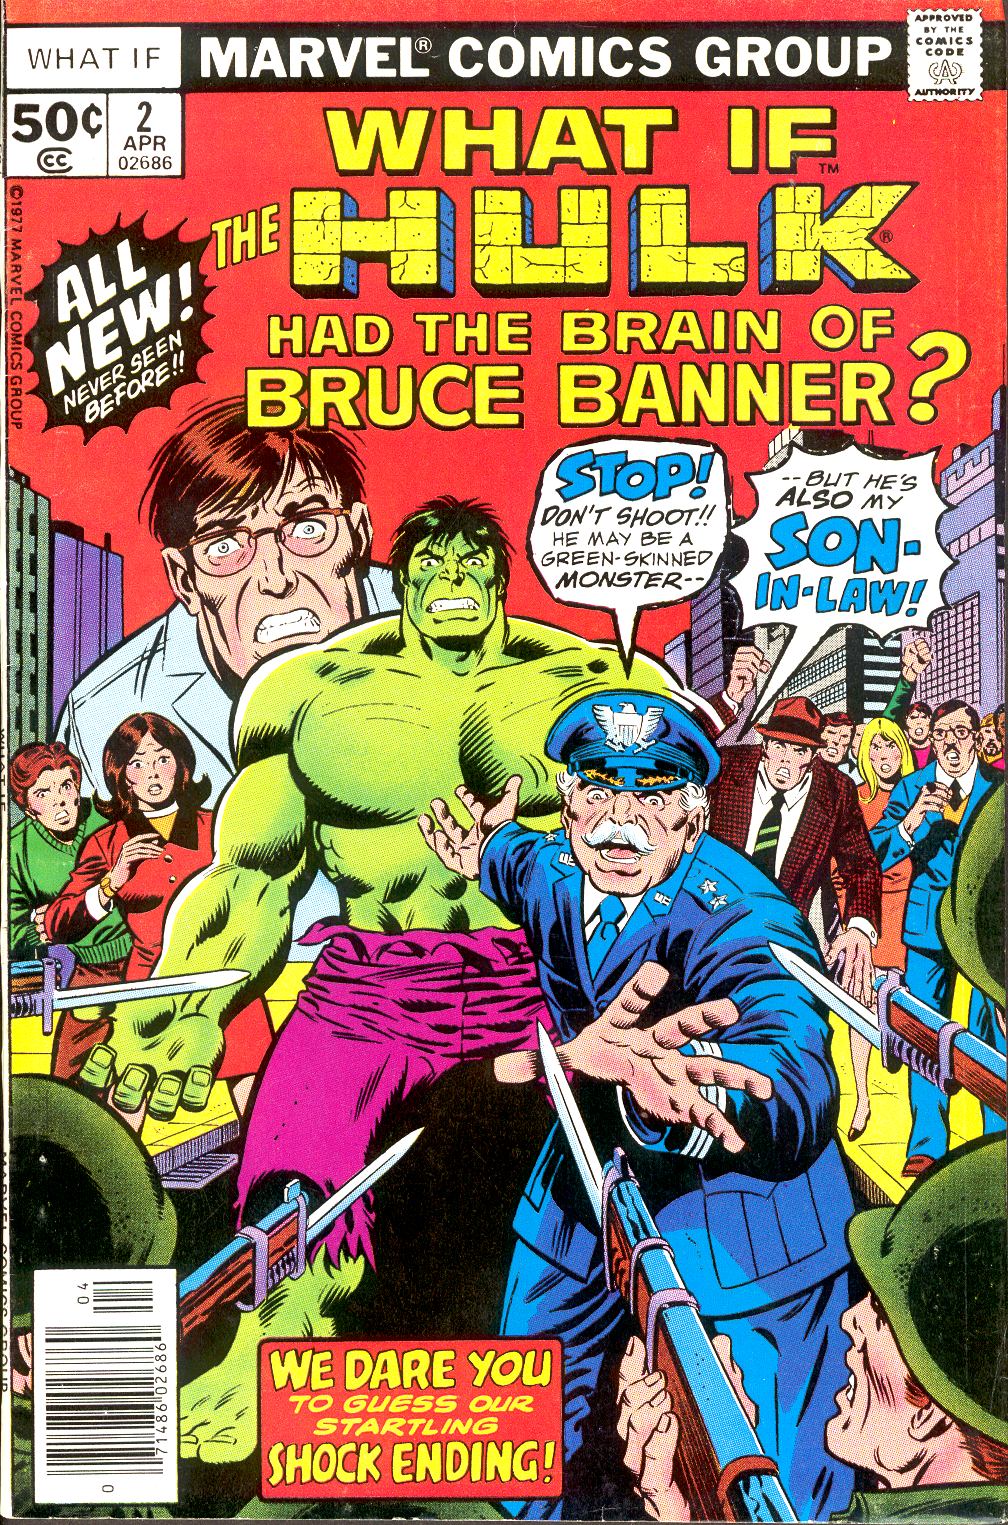 The Hulk had the brain of Bruce Banner